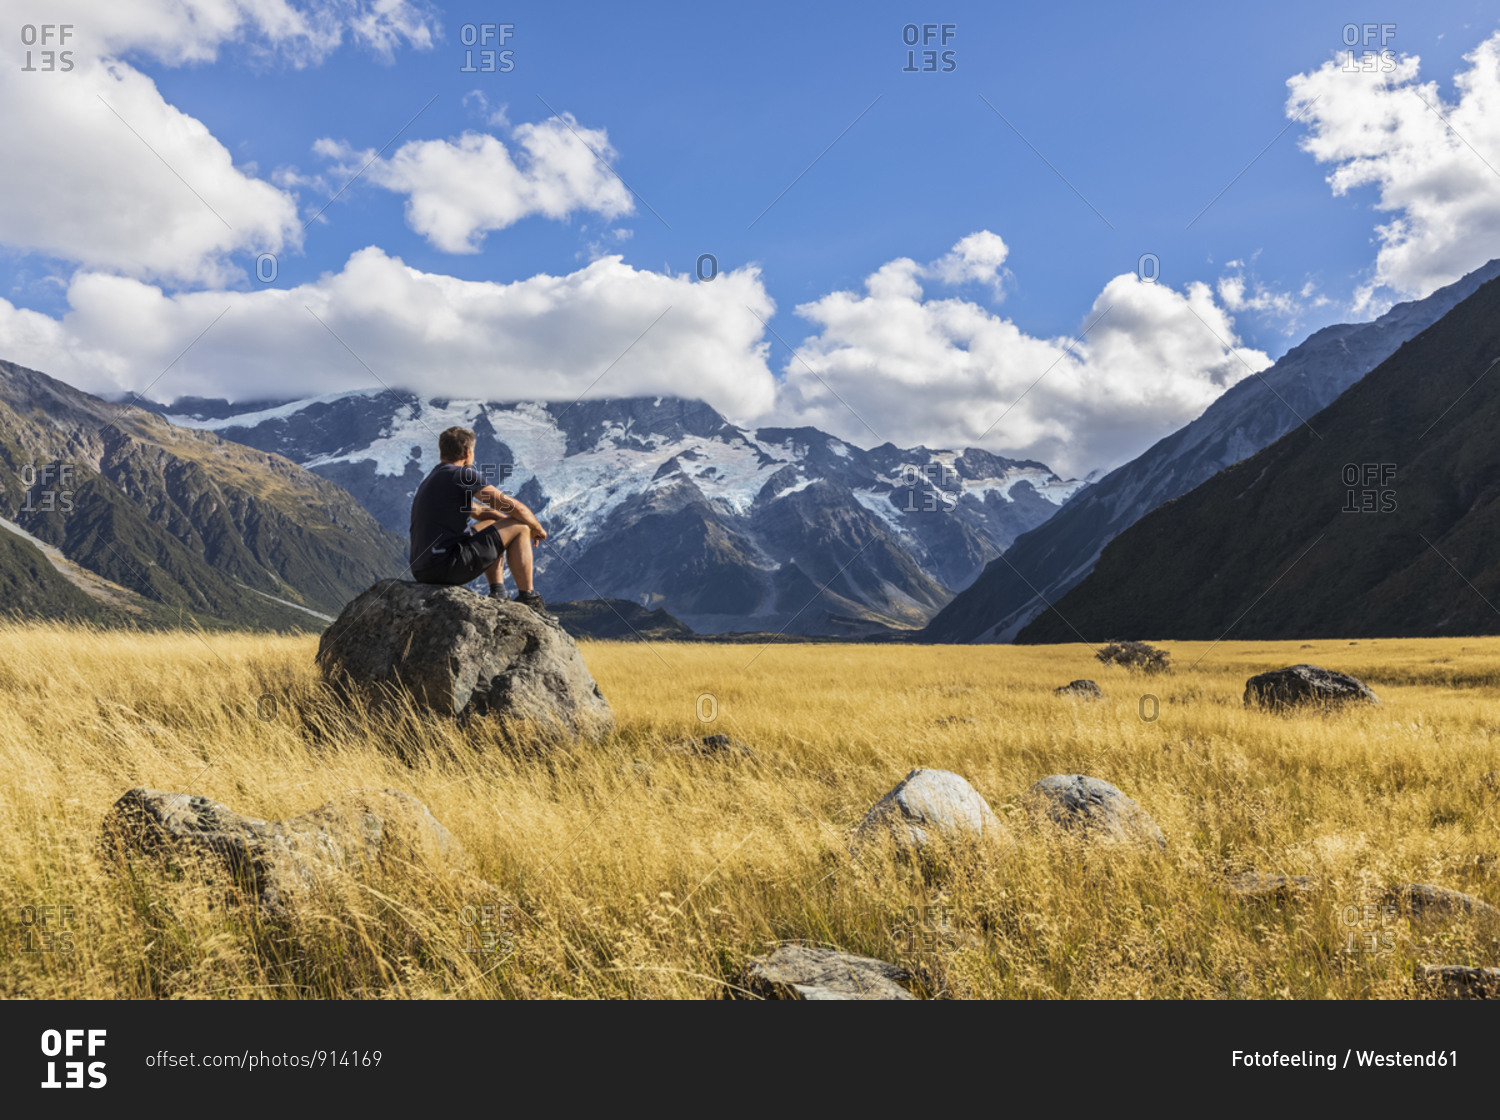 New Zealand- Oceania- South Island- Canterbury- Ben Ohau- Southern Alps (New Zealand Alps)- Mount Cook National Park- Aoraki / Mount Cook- Man sitting on boulder in mountain landscape